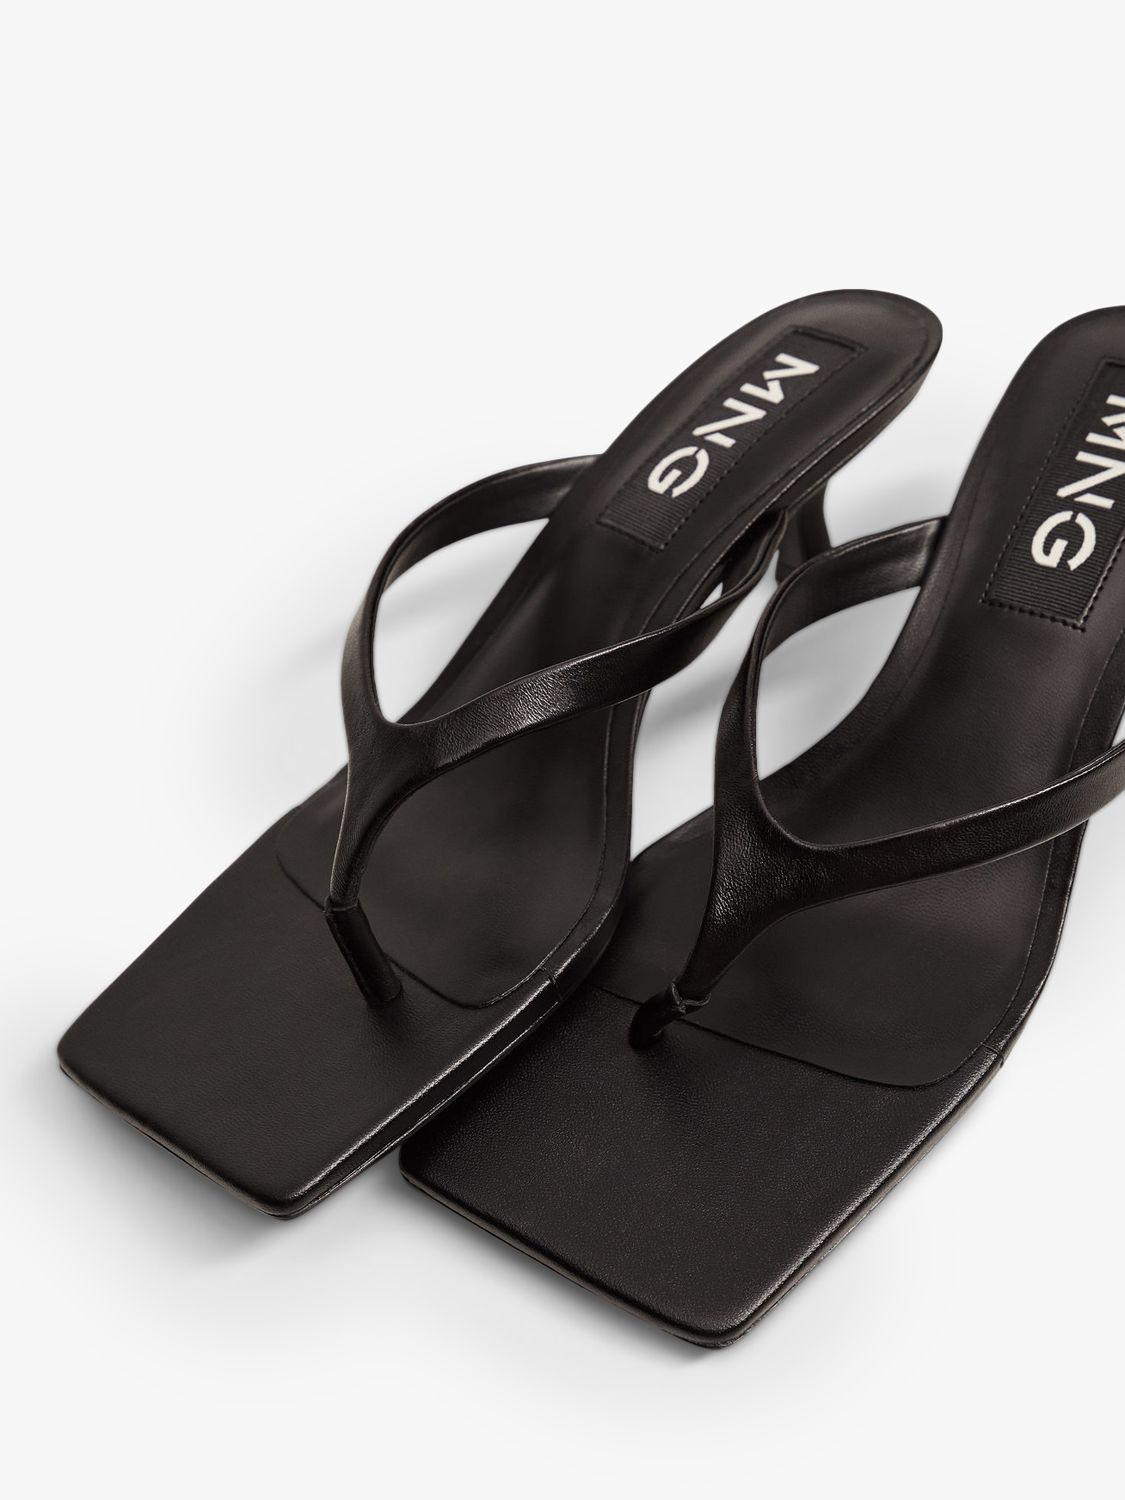 Mango Heeled Leather Slip On Sandals, Black at John Lewis & Partners